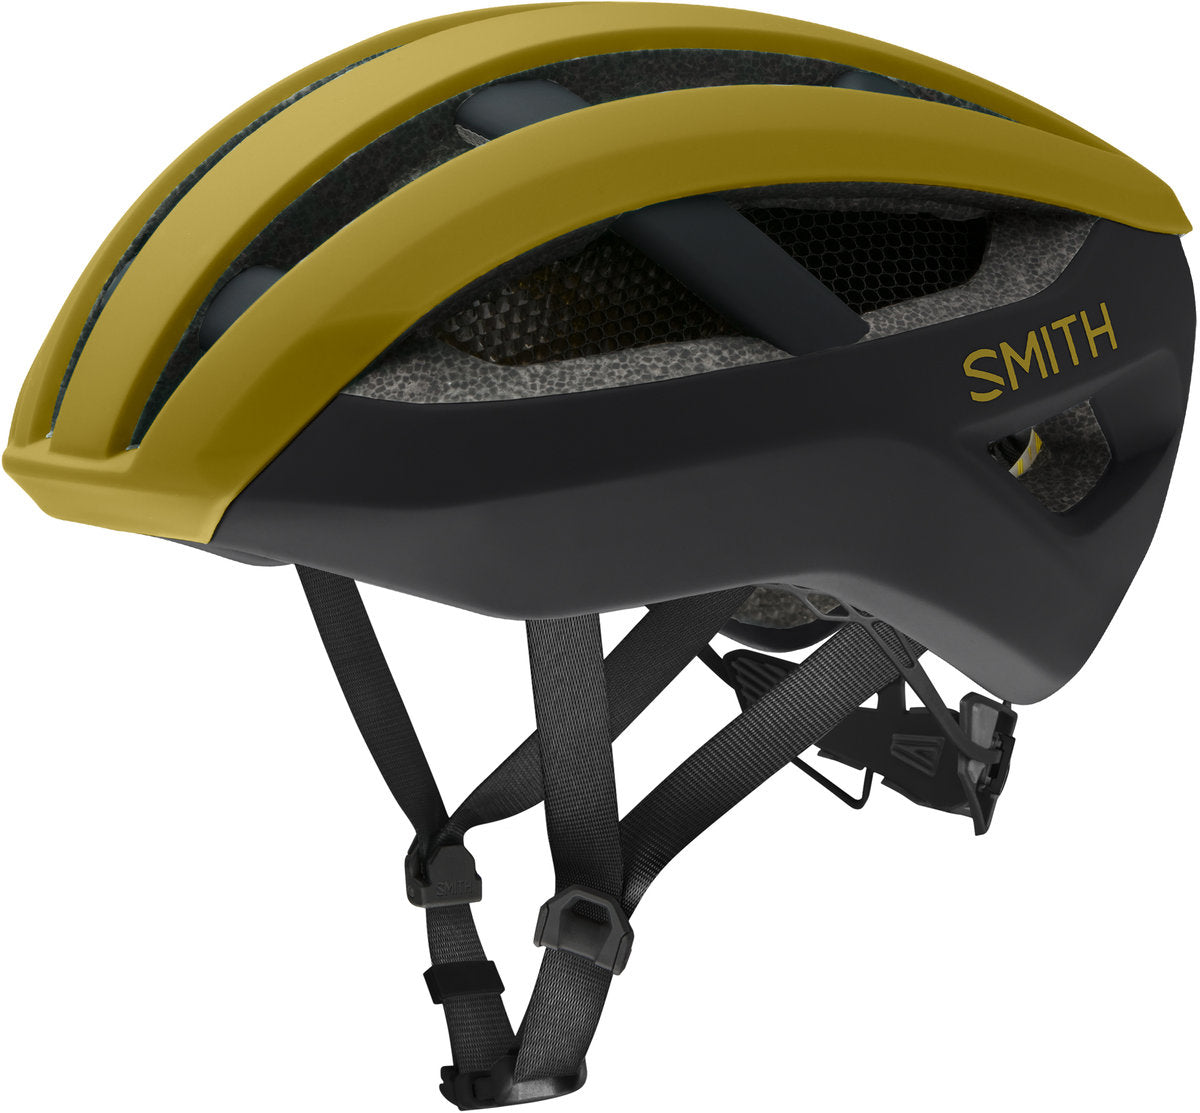 Photos - Protective Gear Set Smith Optics Smith Network Helmet - Neon Yellow - Large E0073204G5962 